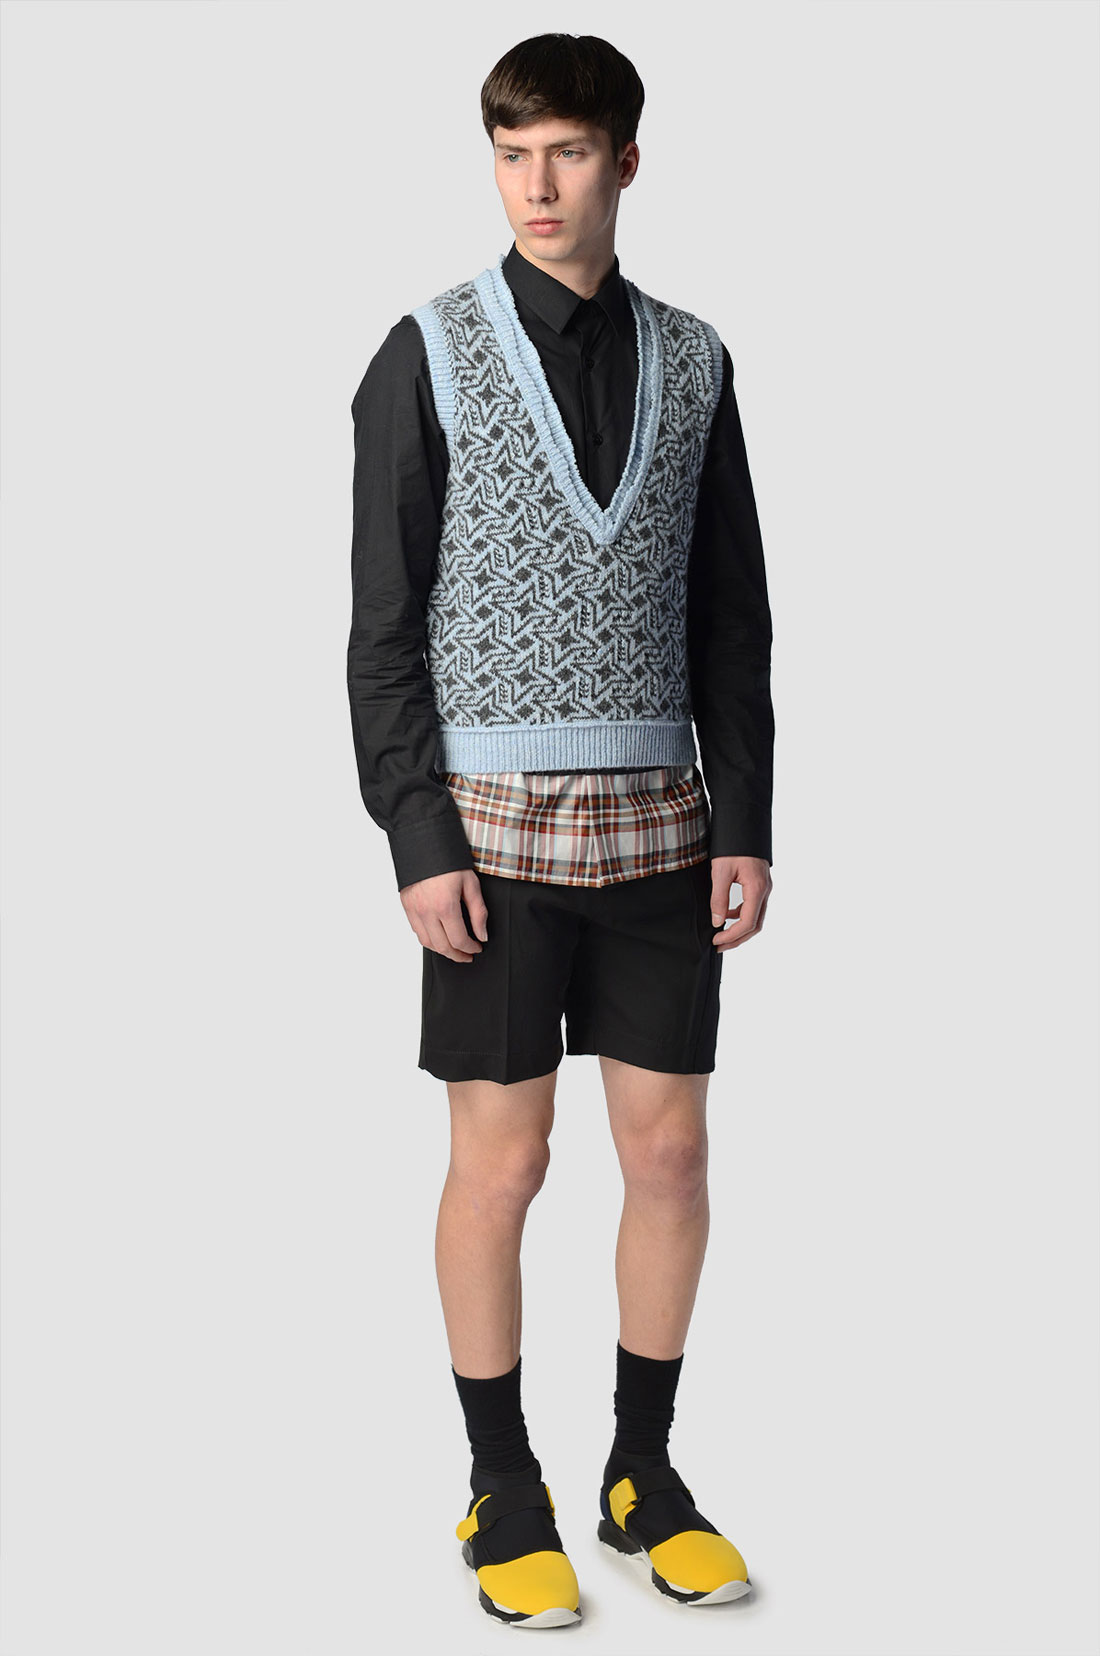 Raf Simons Menswear on Wrong Weather - Design Scene - Fashion ...